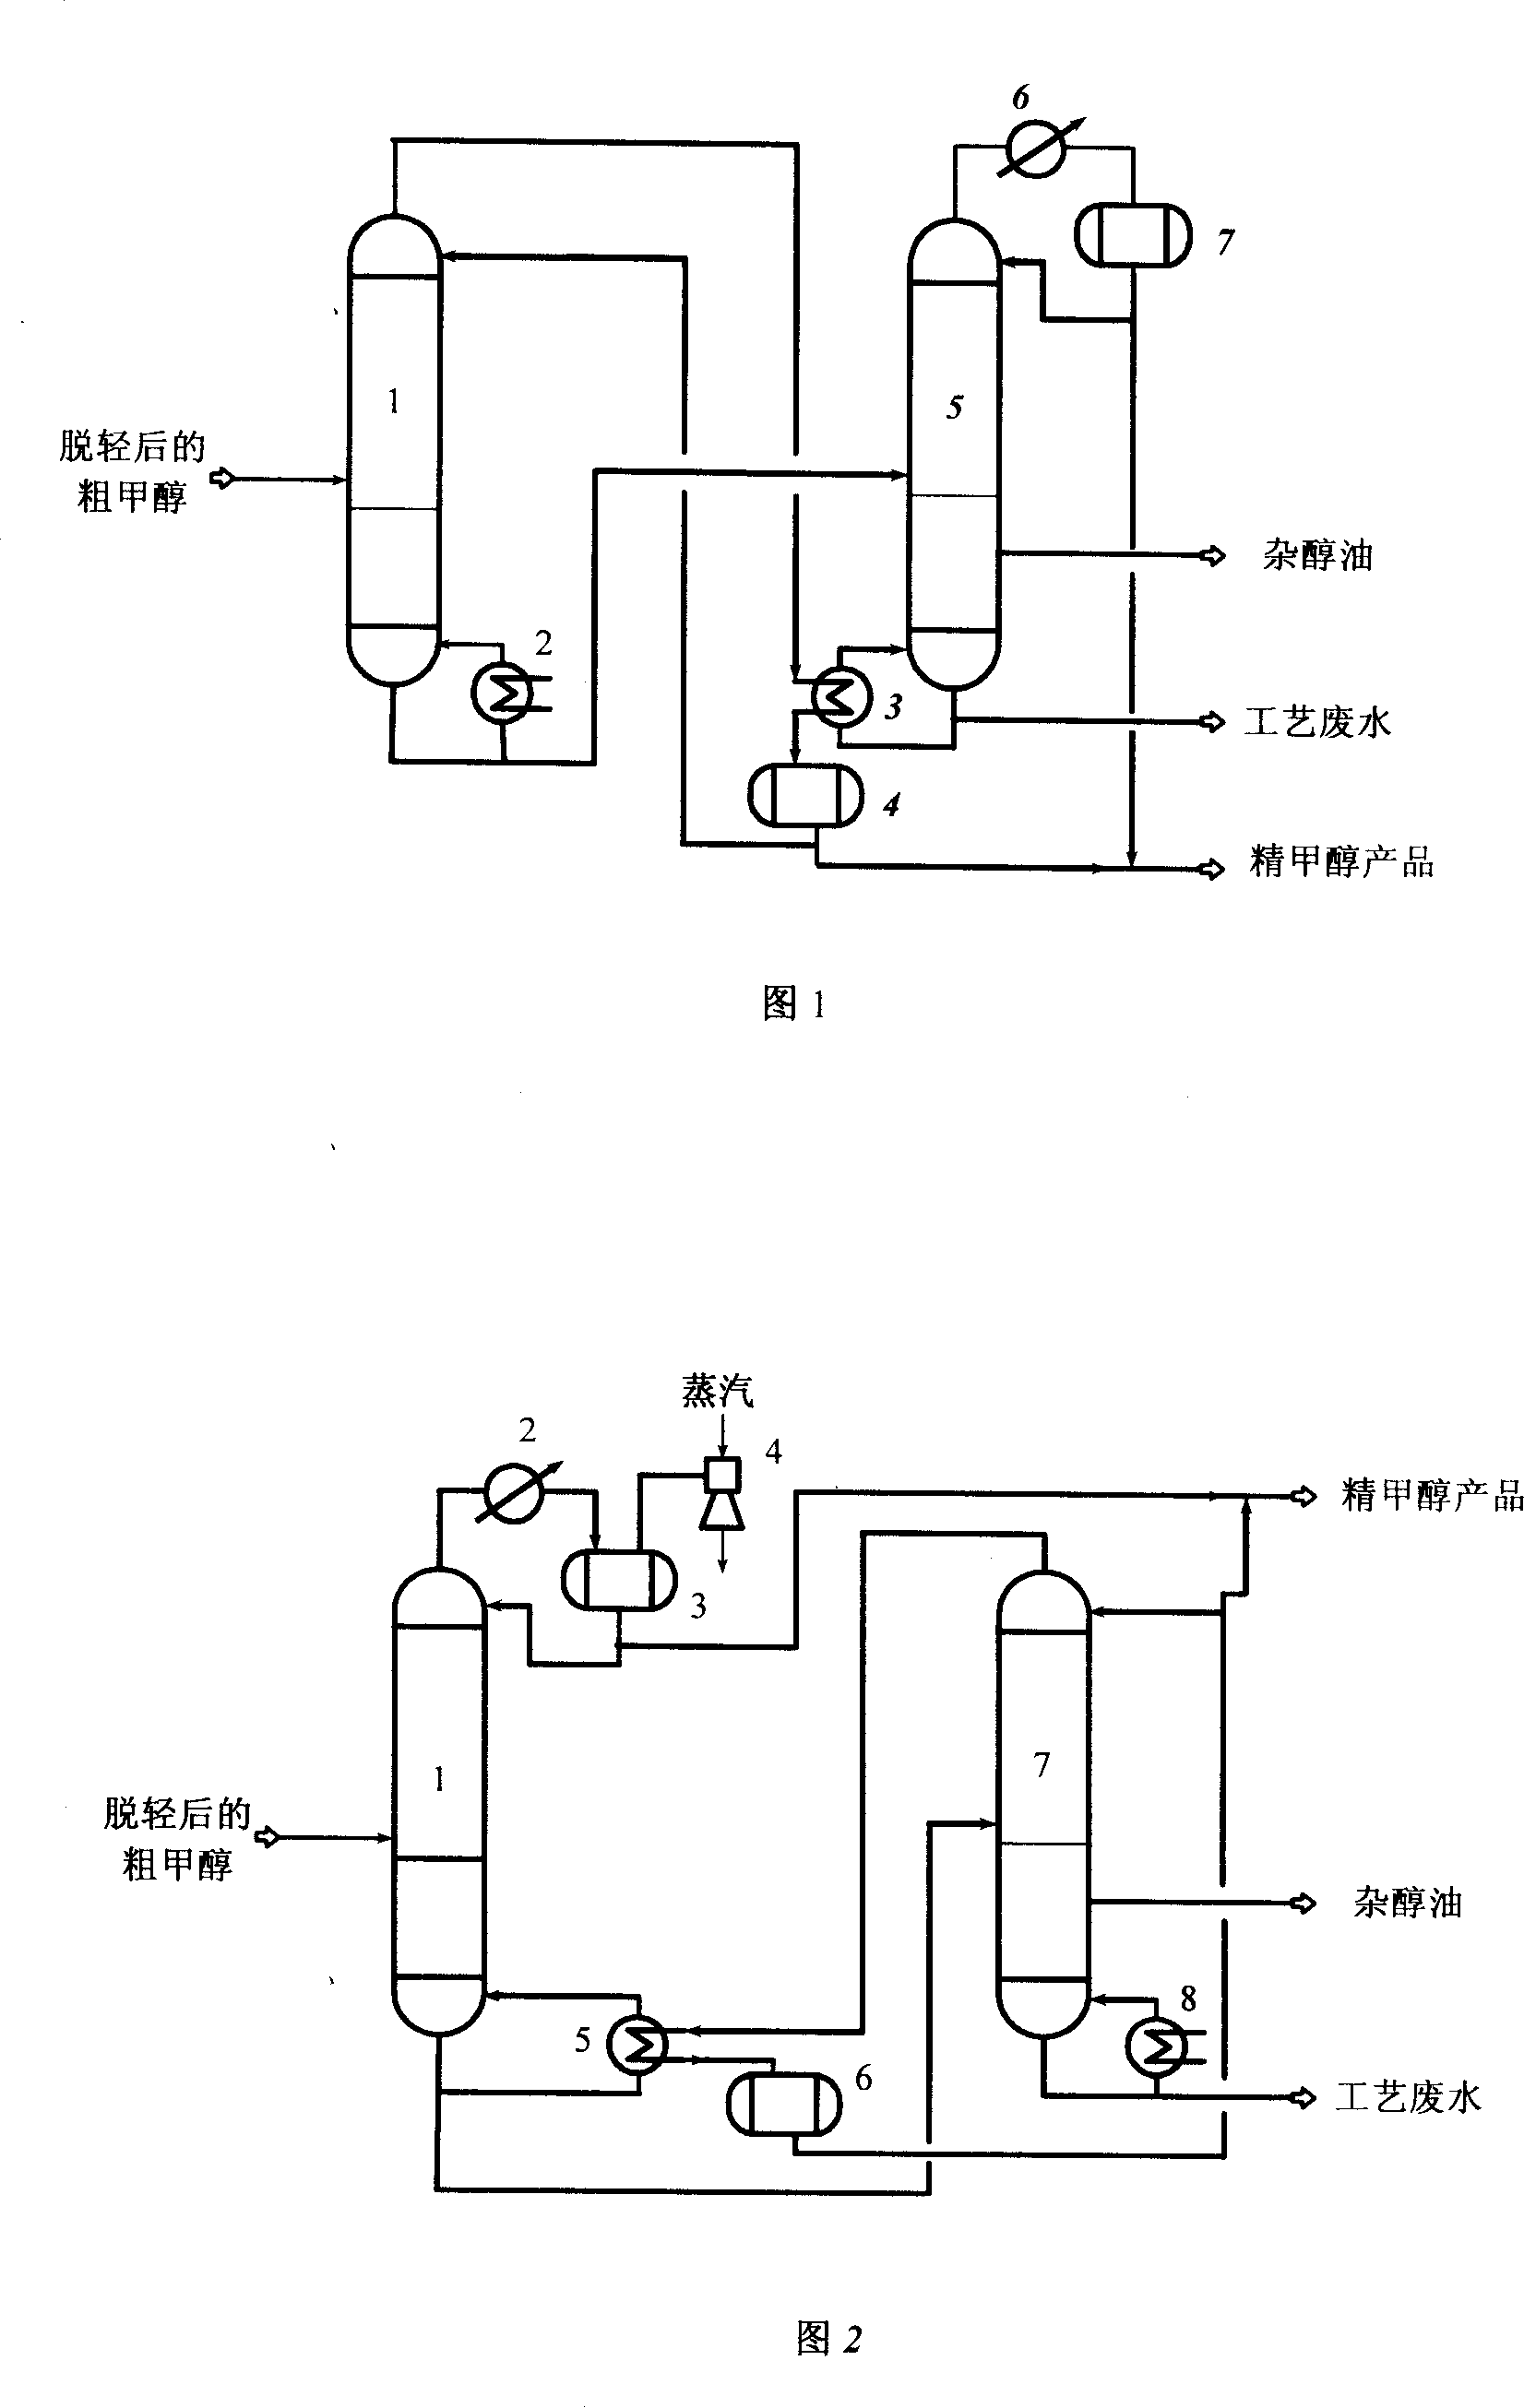 Pressure-reducing flow-reversing dual-purpose distillation method and apparatus for refining crude methanol